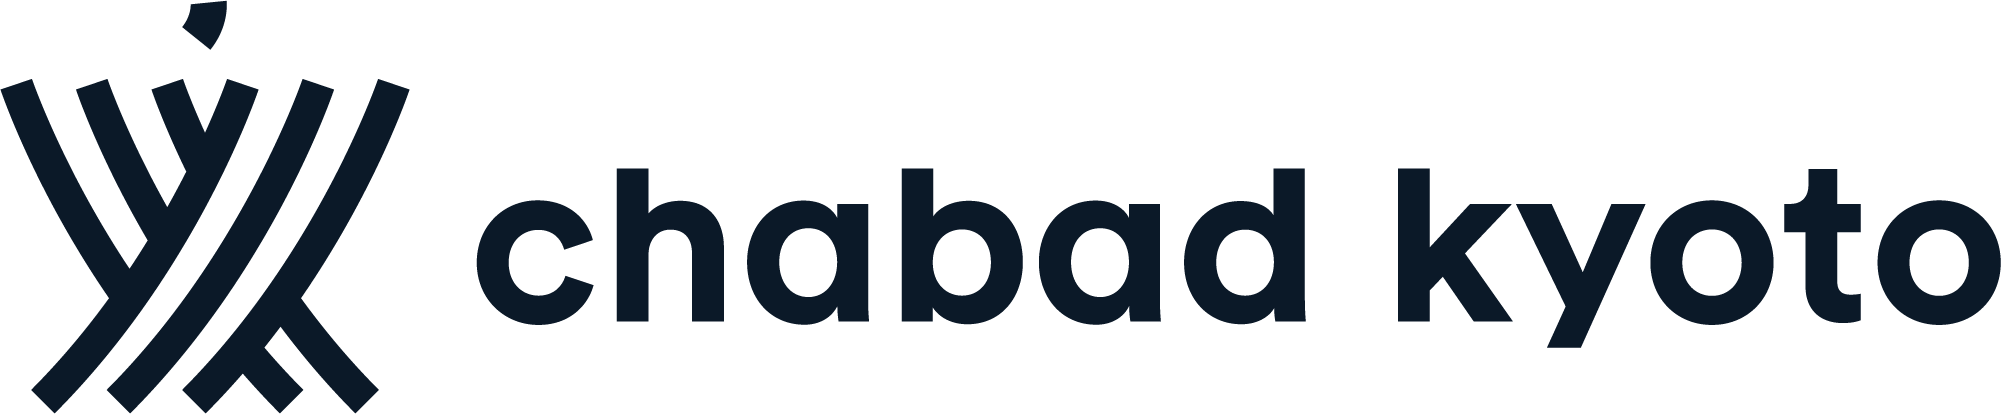 Chabad of Japan logo